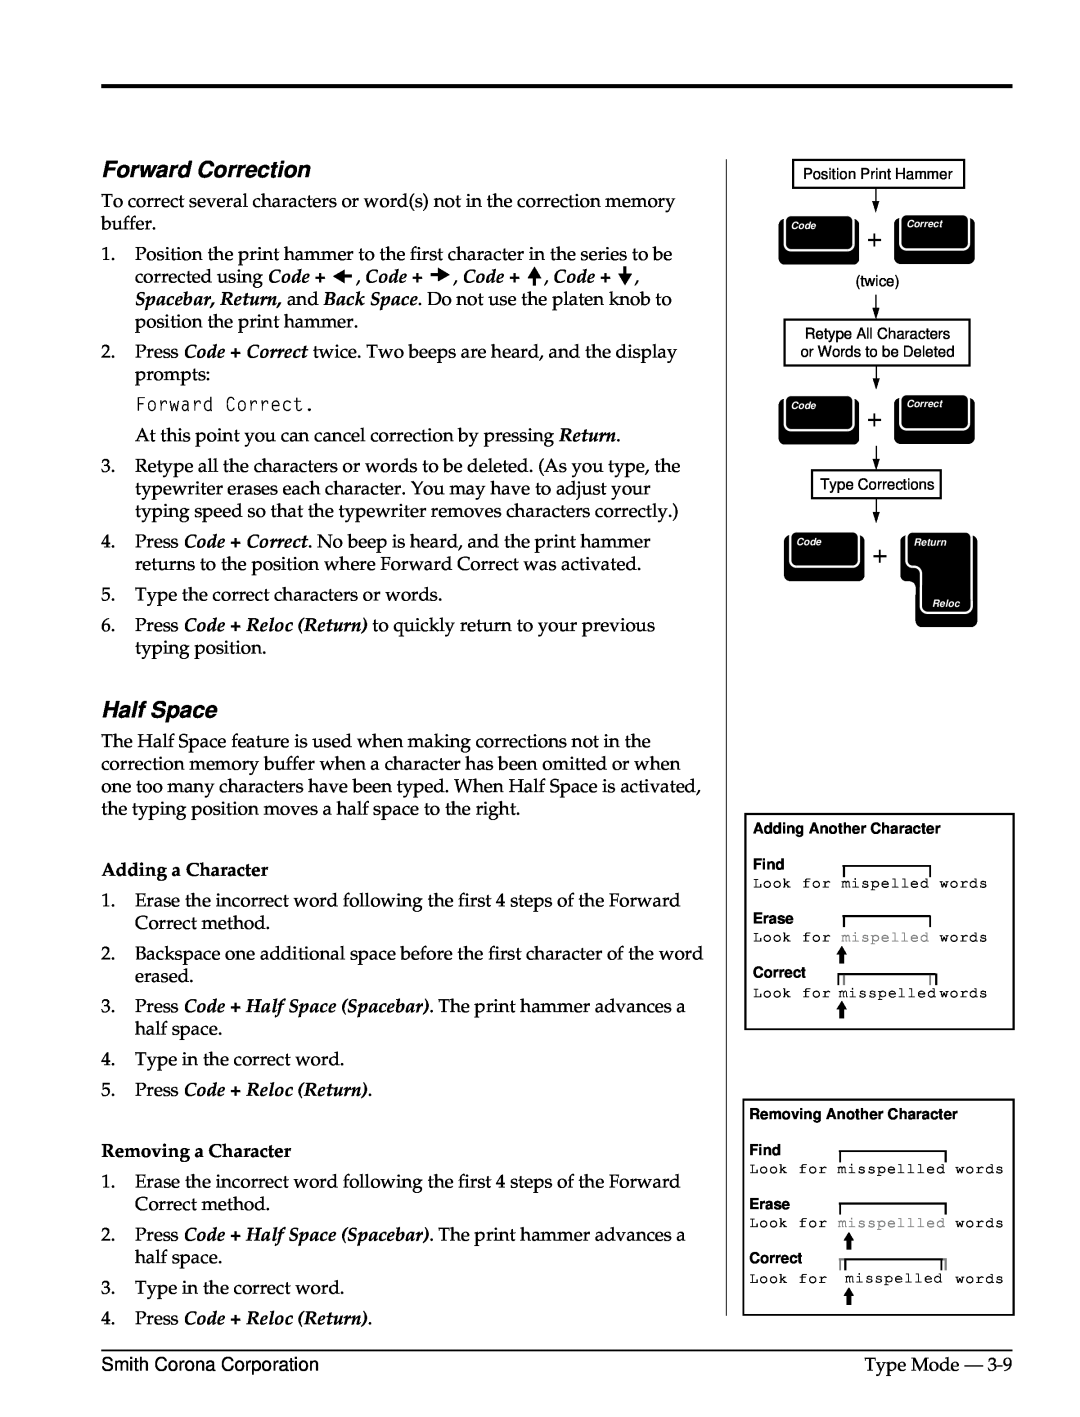 Smith Corona Computer Keyboard manual Forward Correction, Half Space, Adding a Character, Removing a Character 